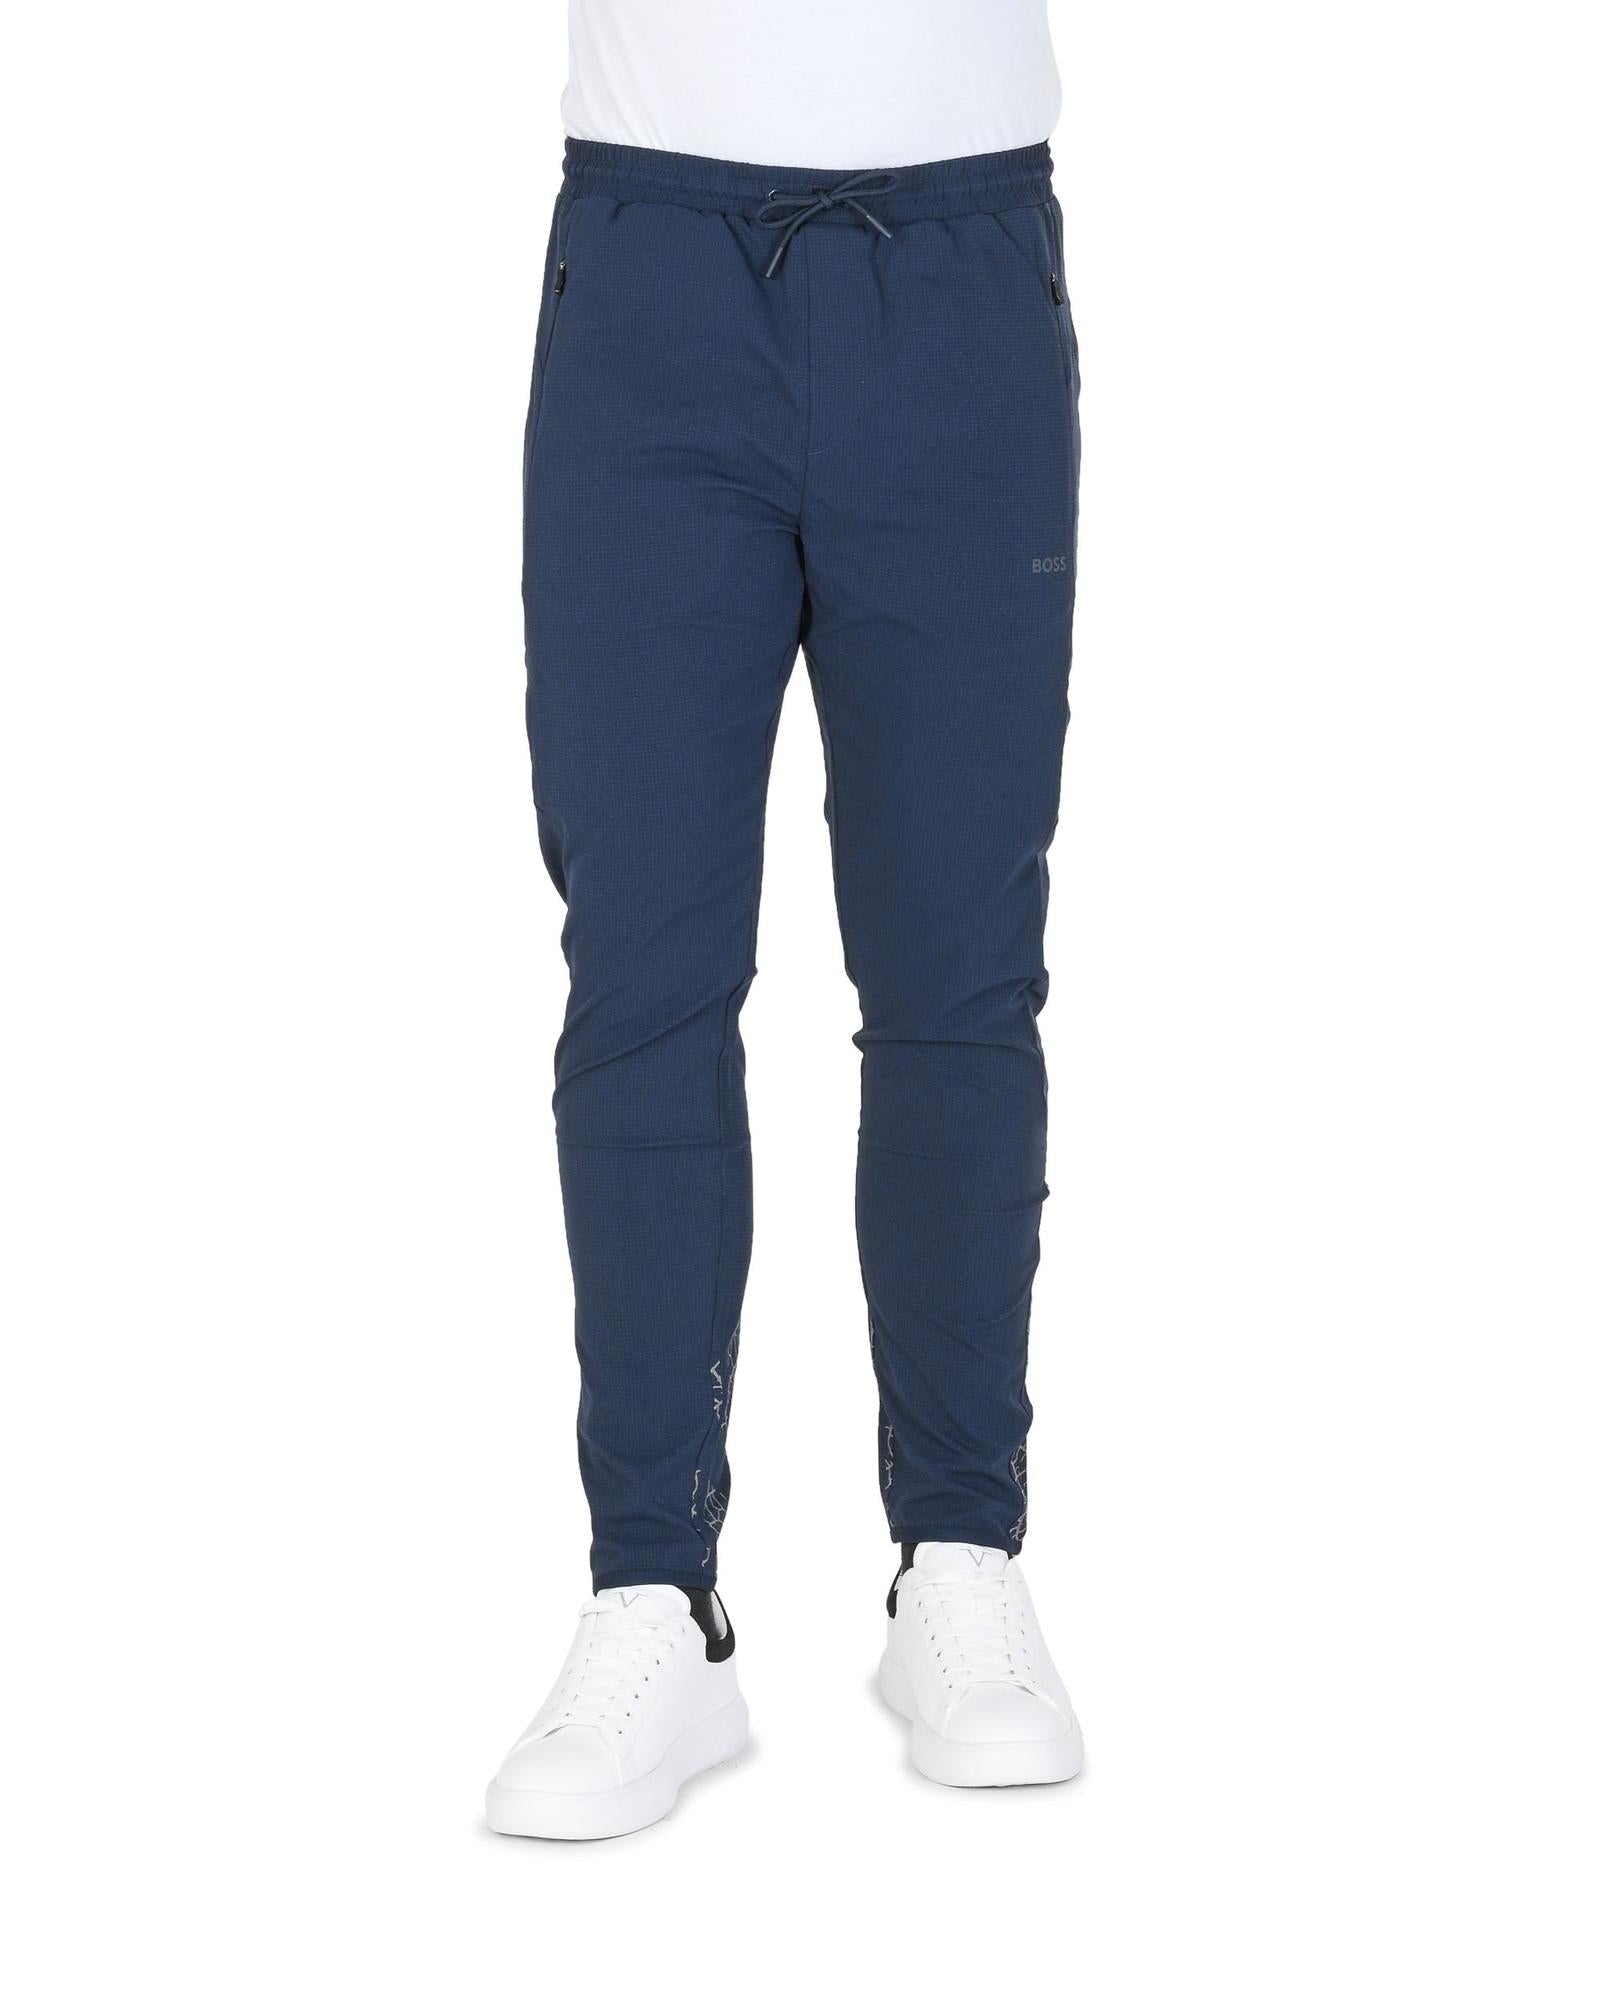 Silver/Navy blue Stride Hugo Boss Men'S Cotton Polyester Blend Pants